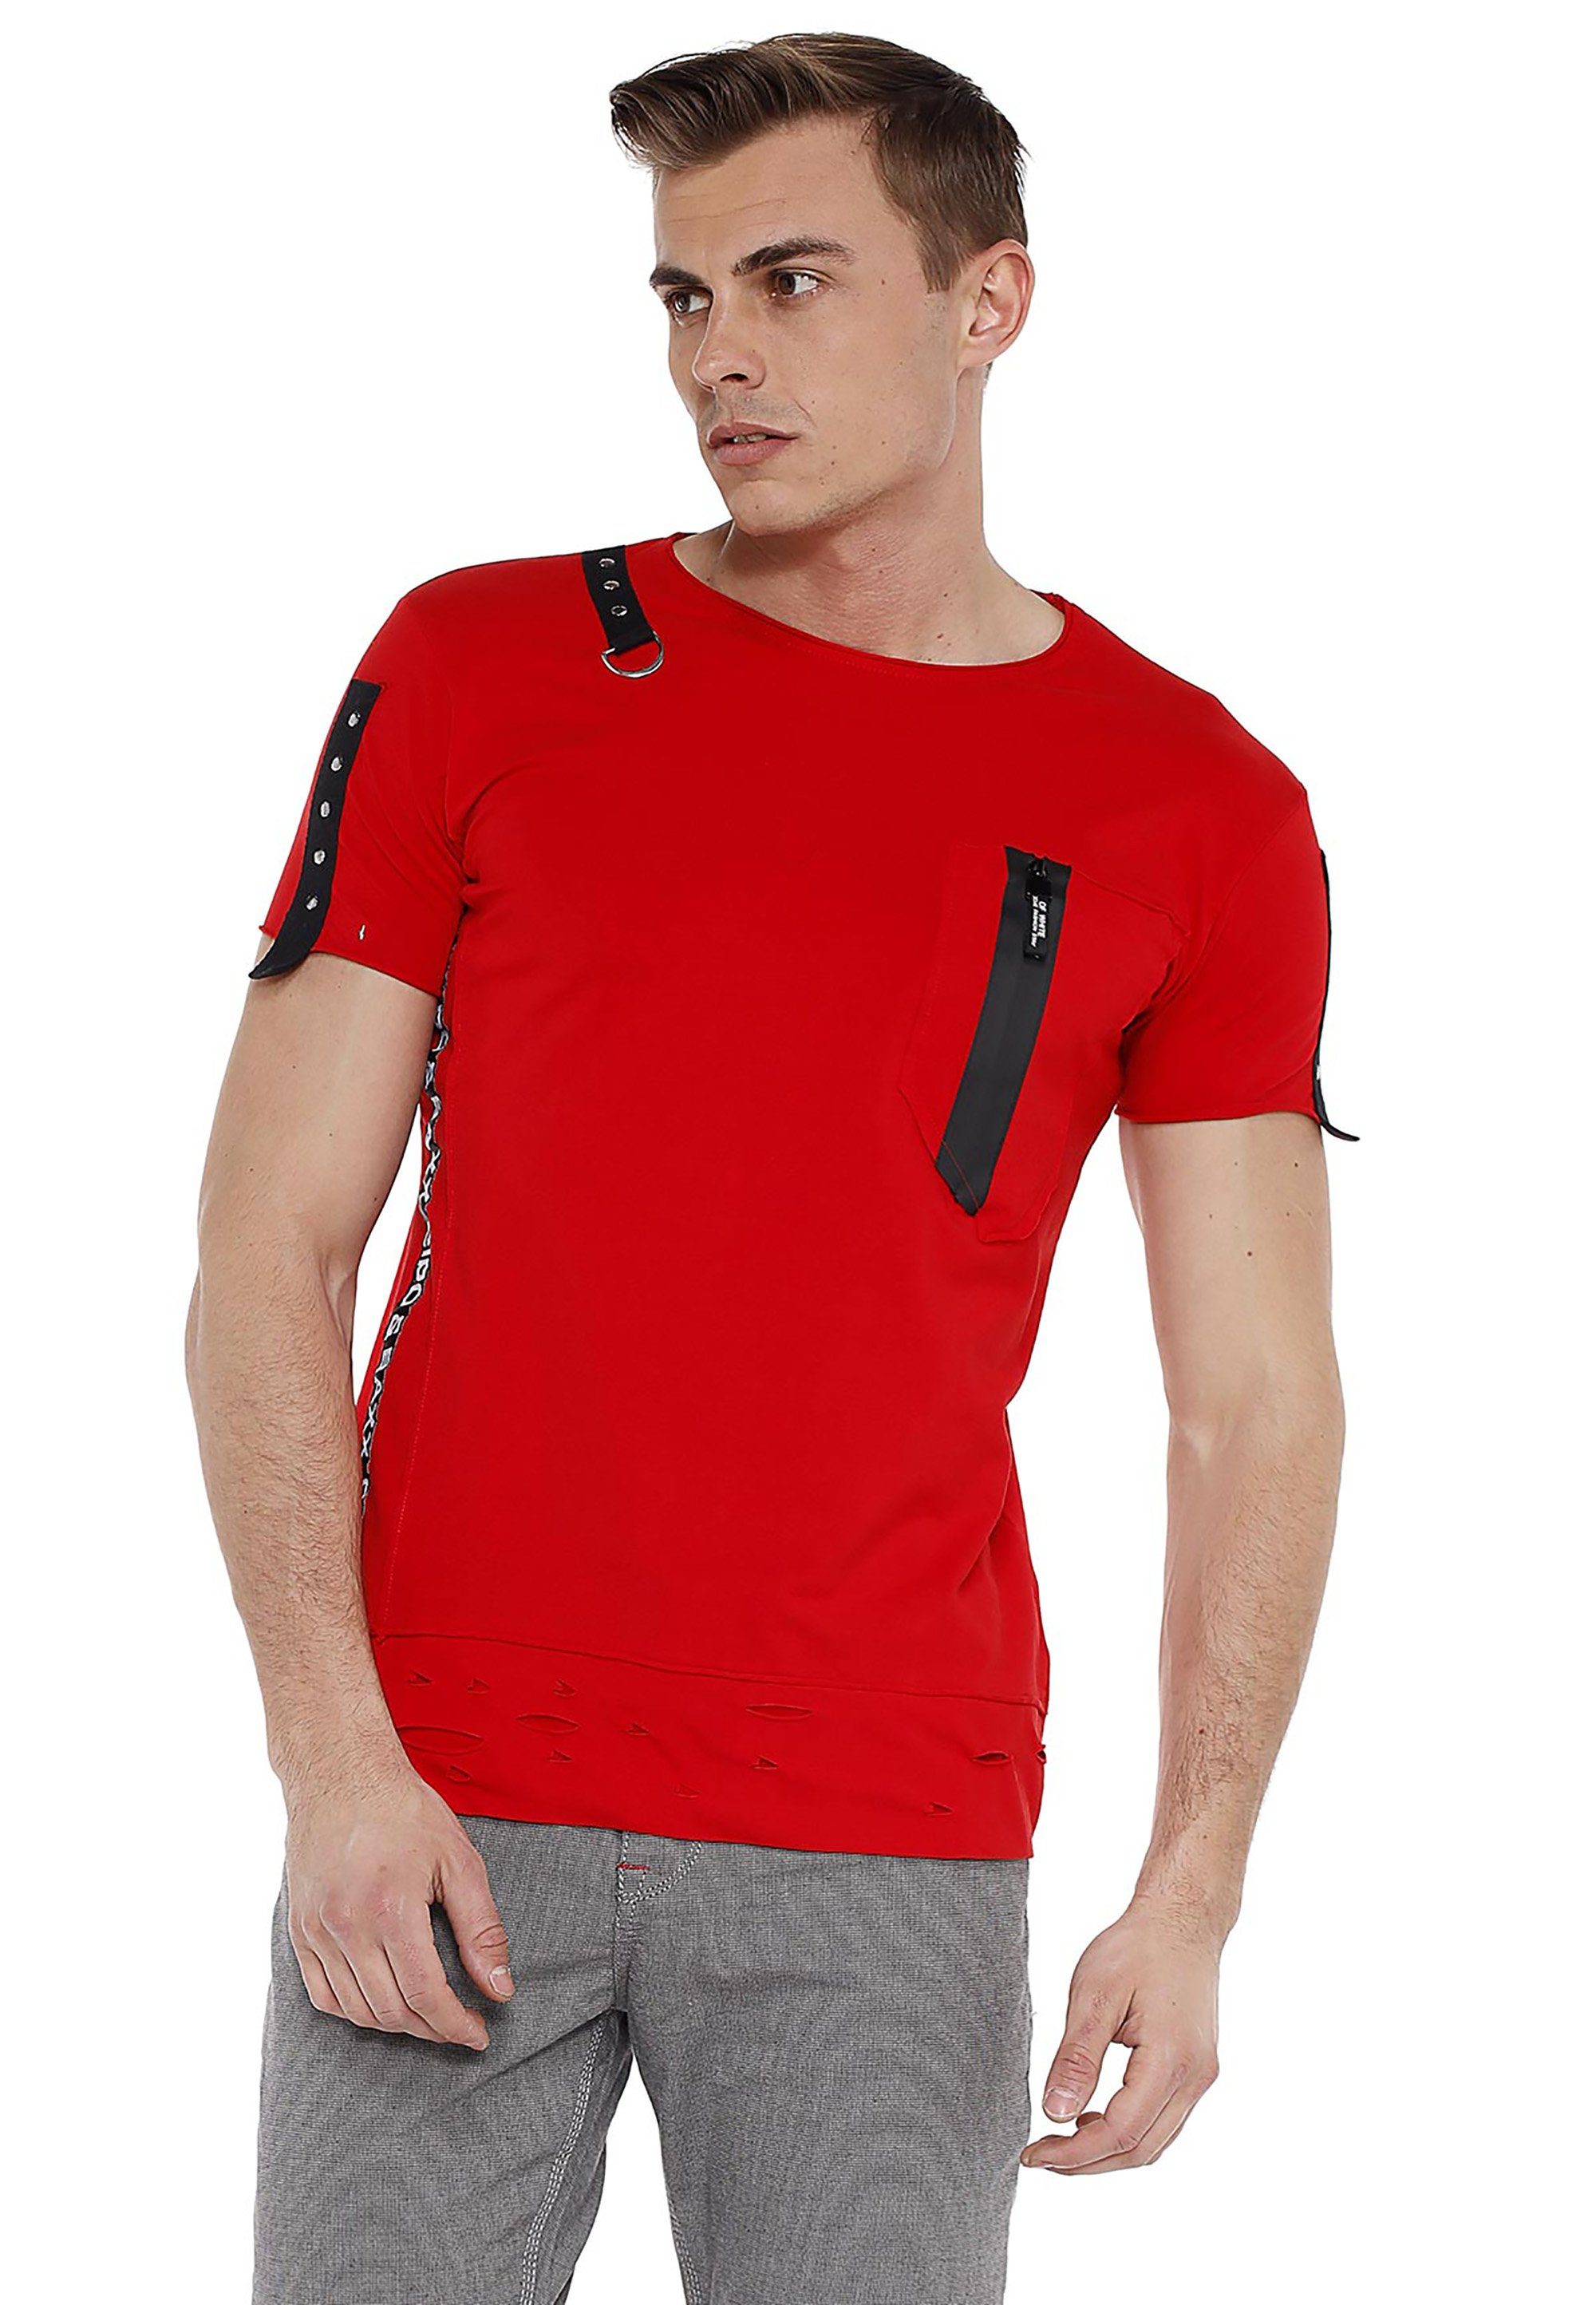 Application Cipo Design mit Baxx & rot T-Shirt